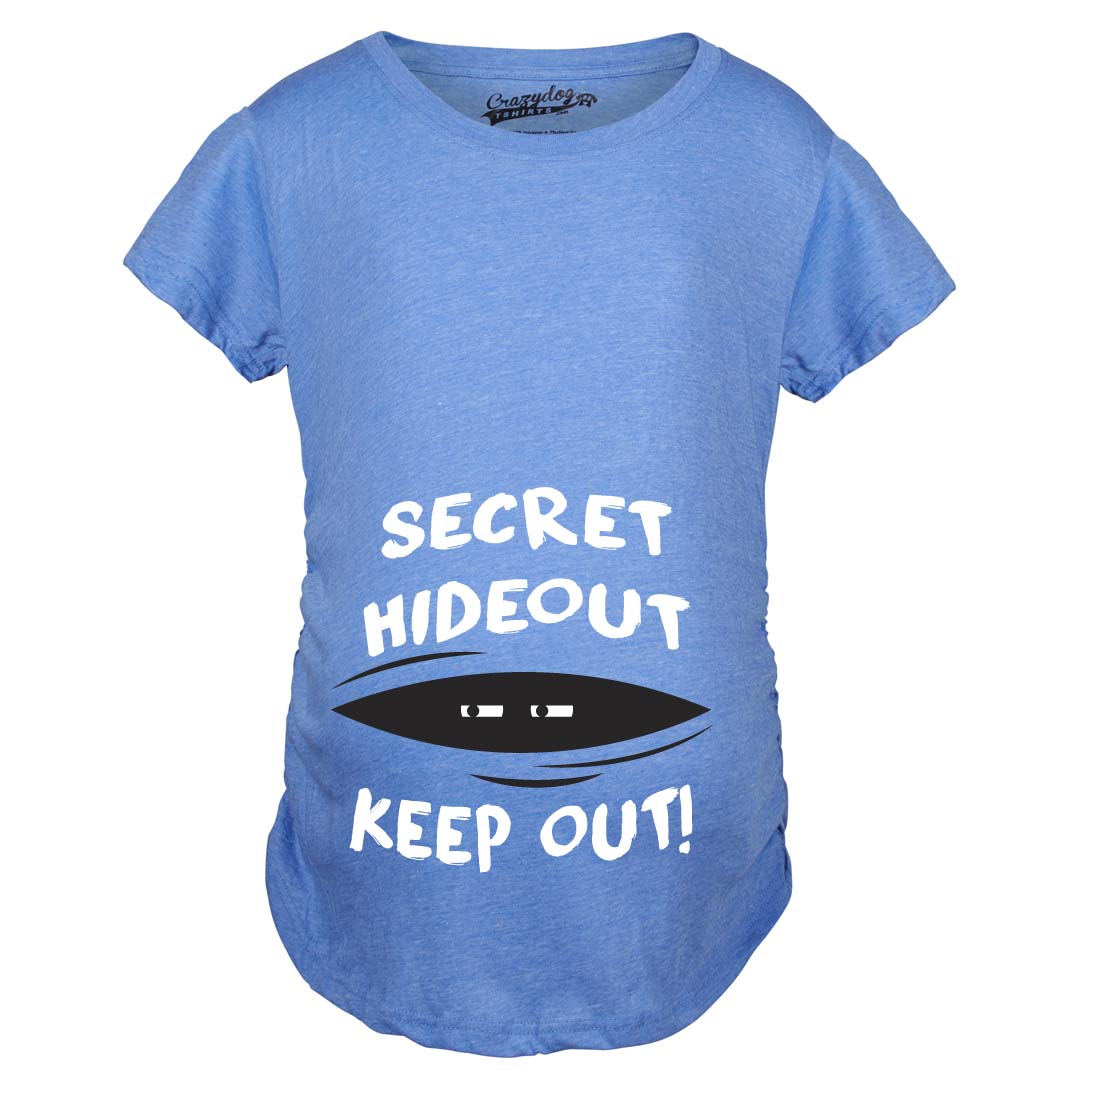 Funny Heather Light Blue Secret Hideout Maternity T Shirt Nerdy Peeking Tee